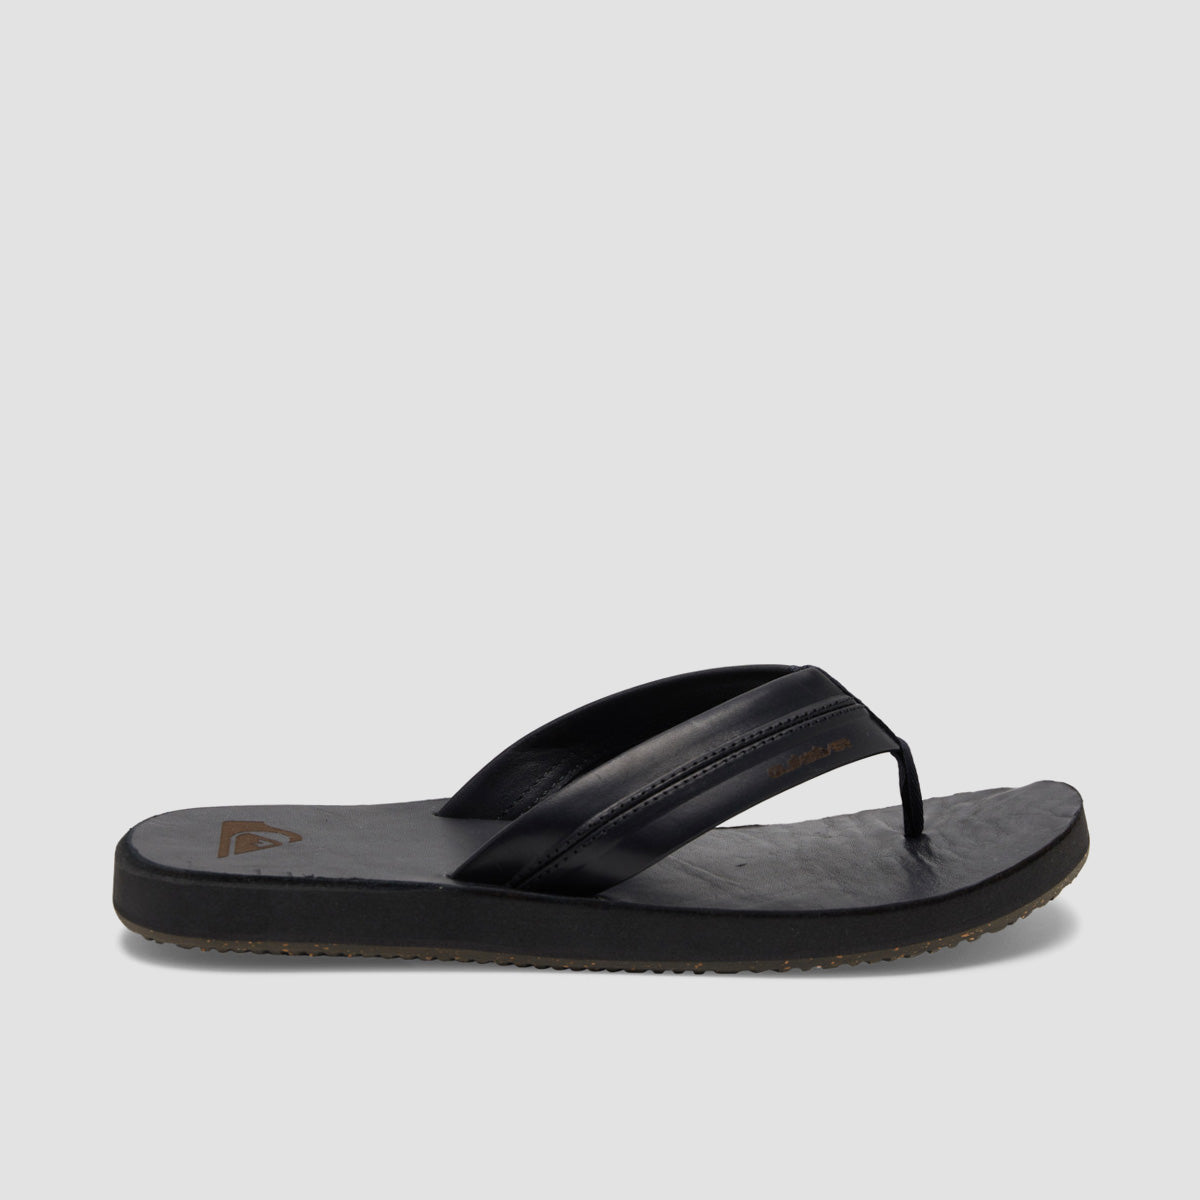 VIYASI Mens Sandals, Summer Men Sandals Leather Platform Wear-resistant  Beach Shoes Breathable Leisure Male Footwear (Color : Black, Shoe Size :  5.5 UK) : Amazon.co.uk: Fashion